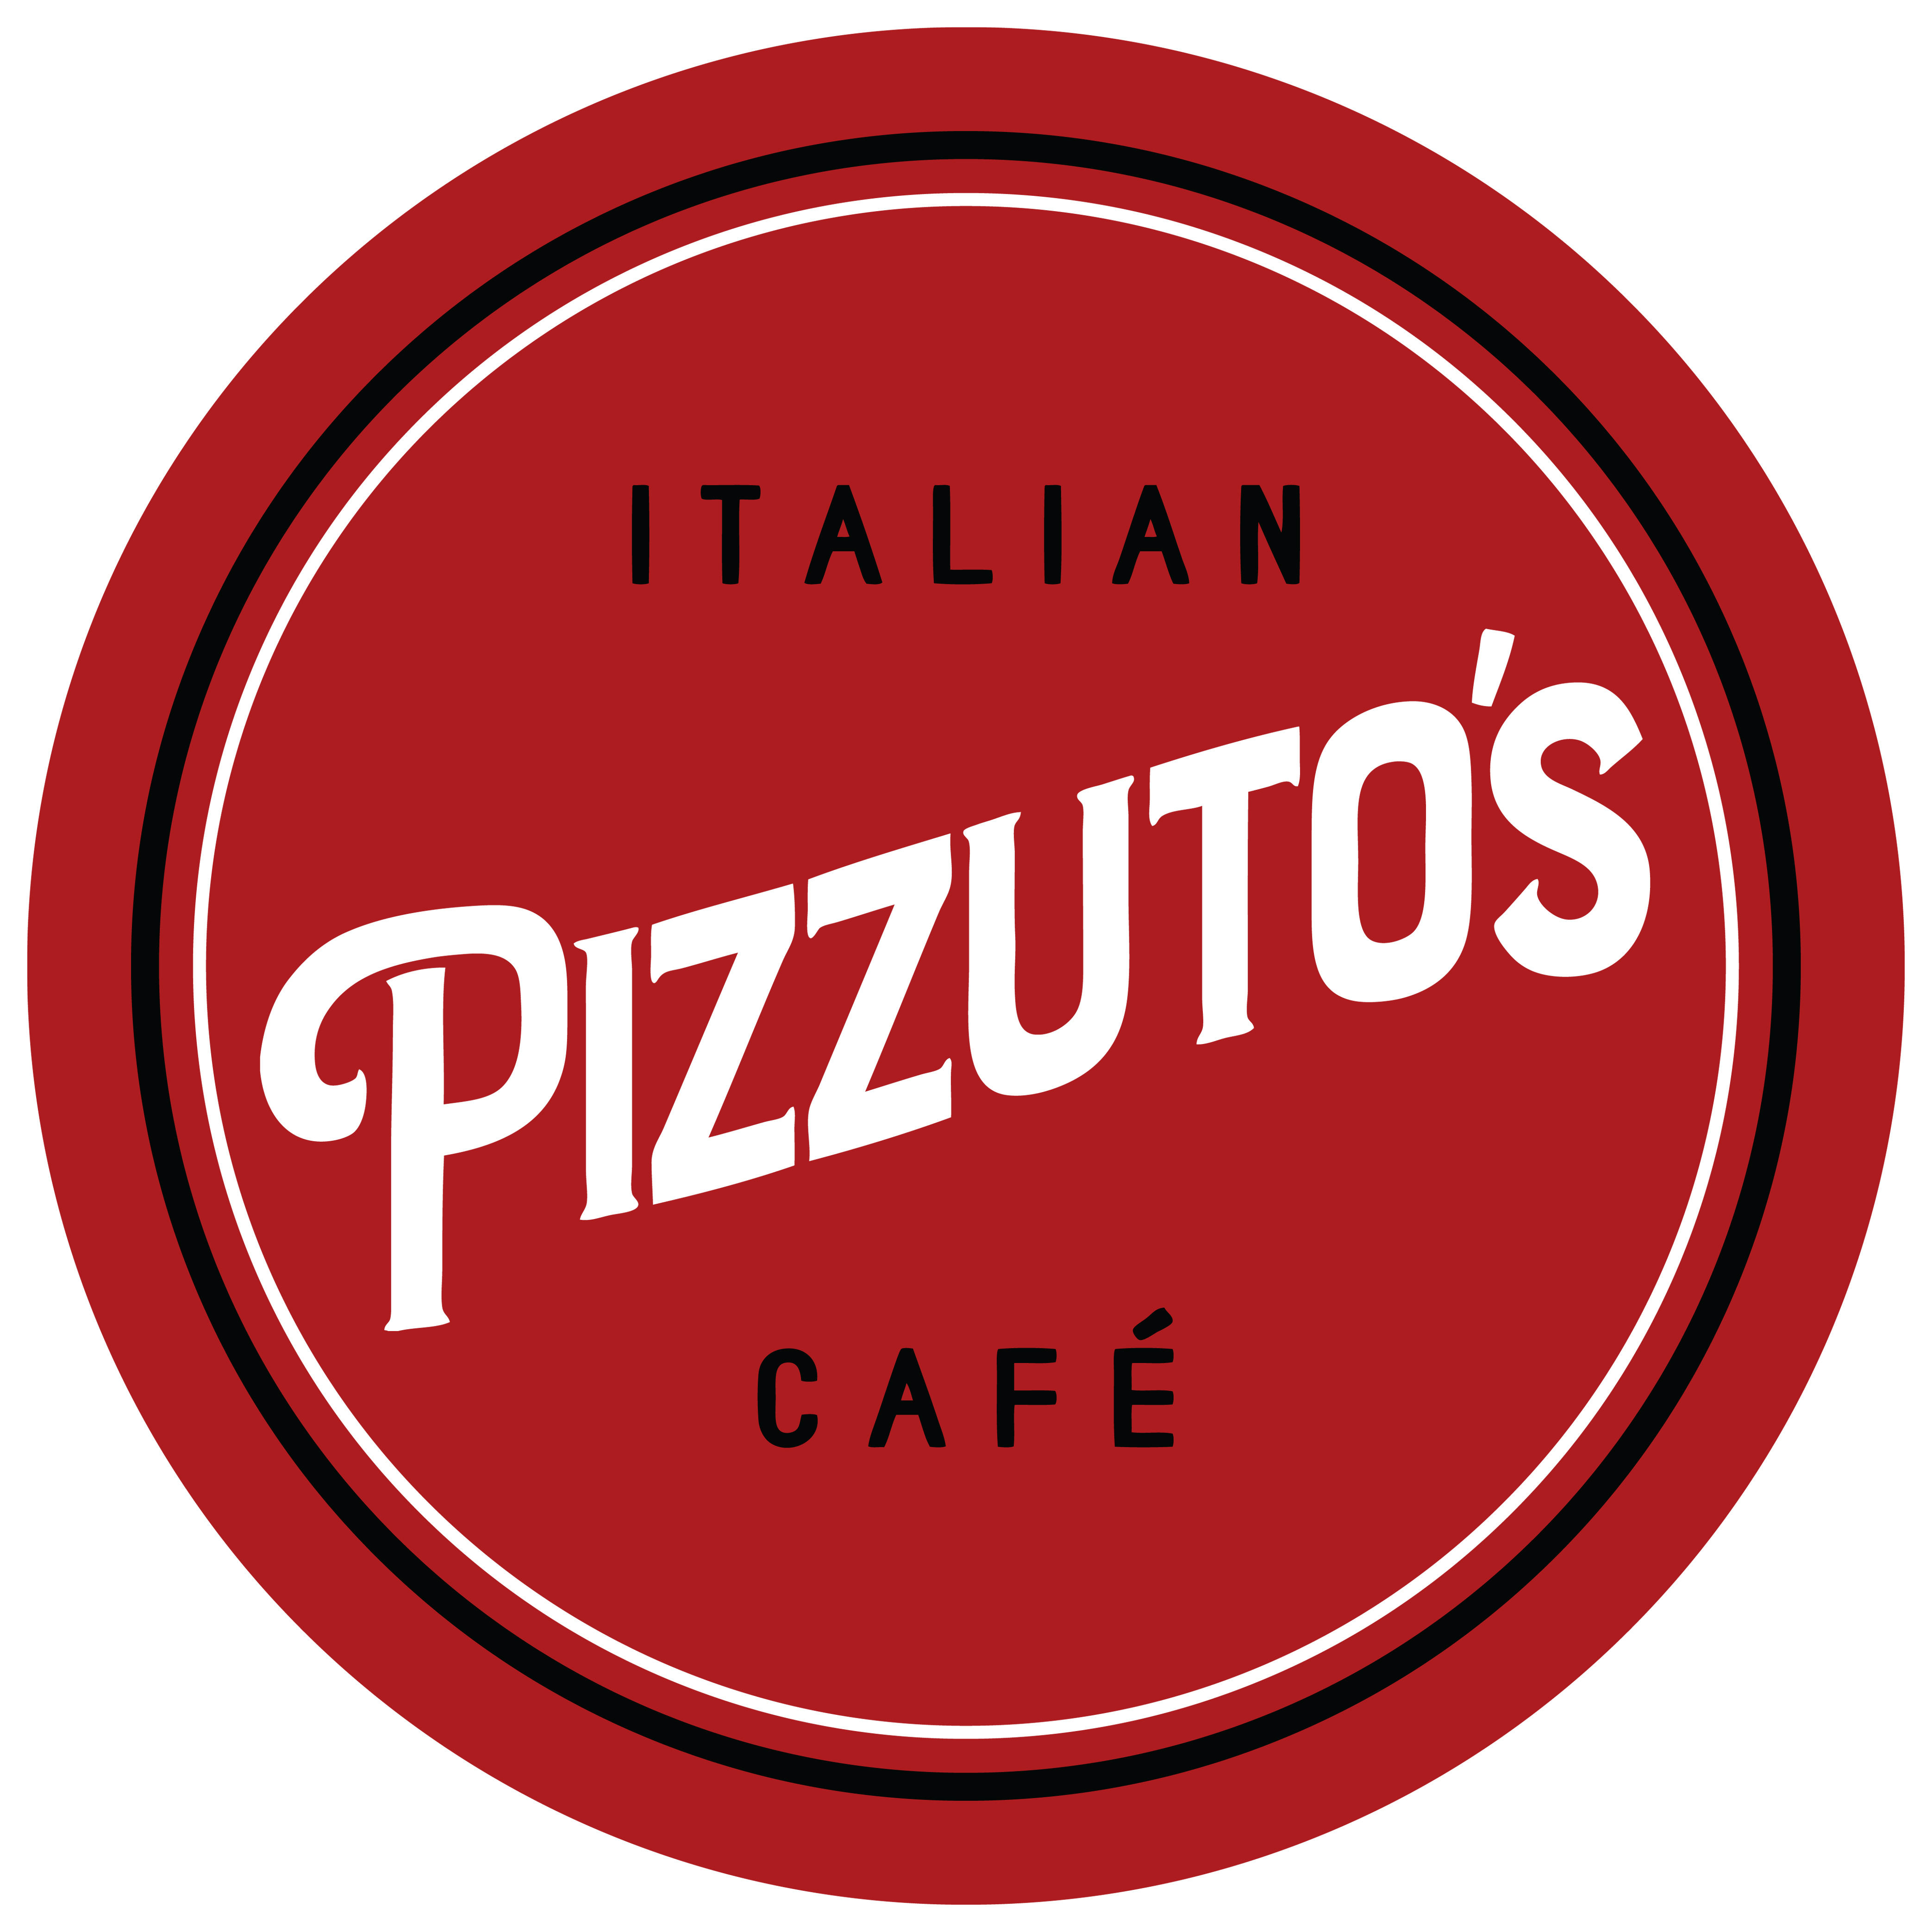 Pizzutos Italian Cafe